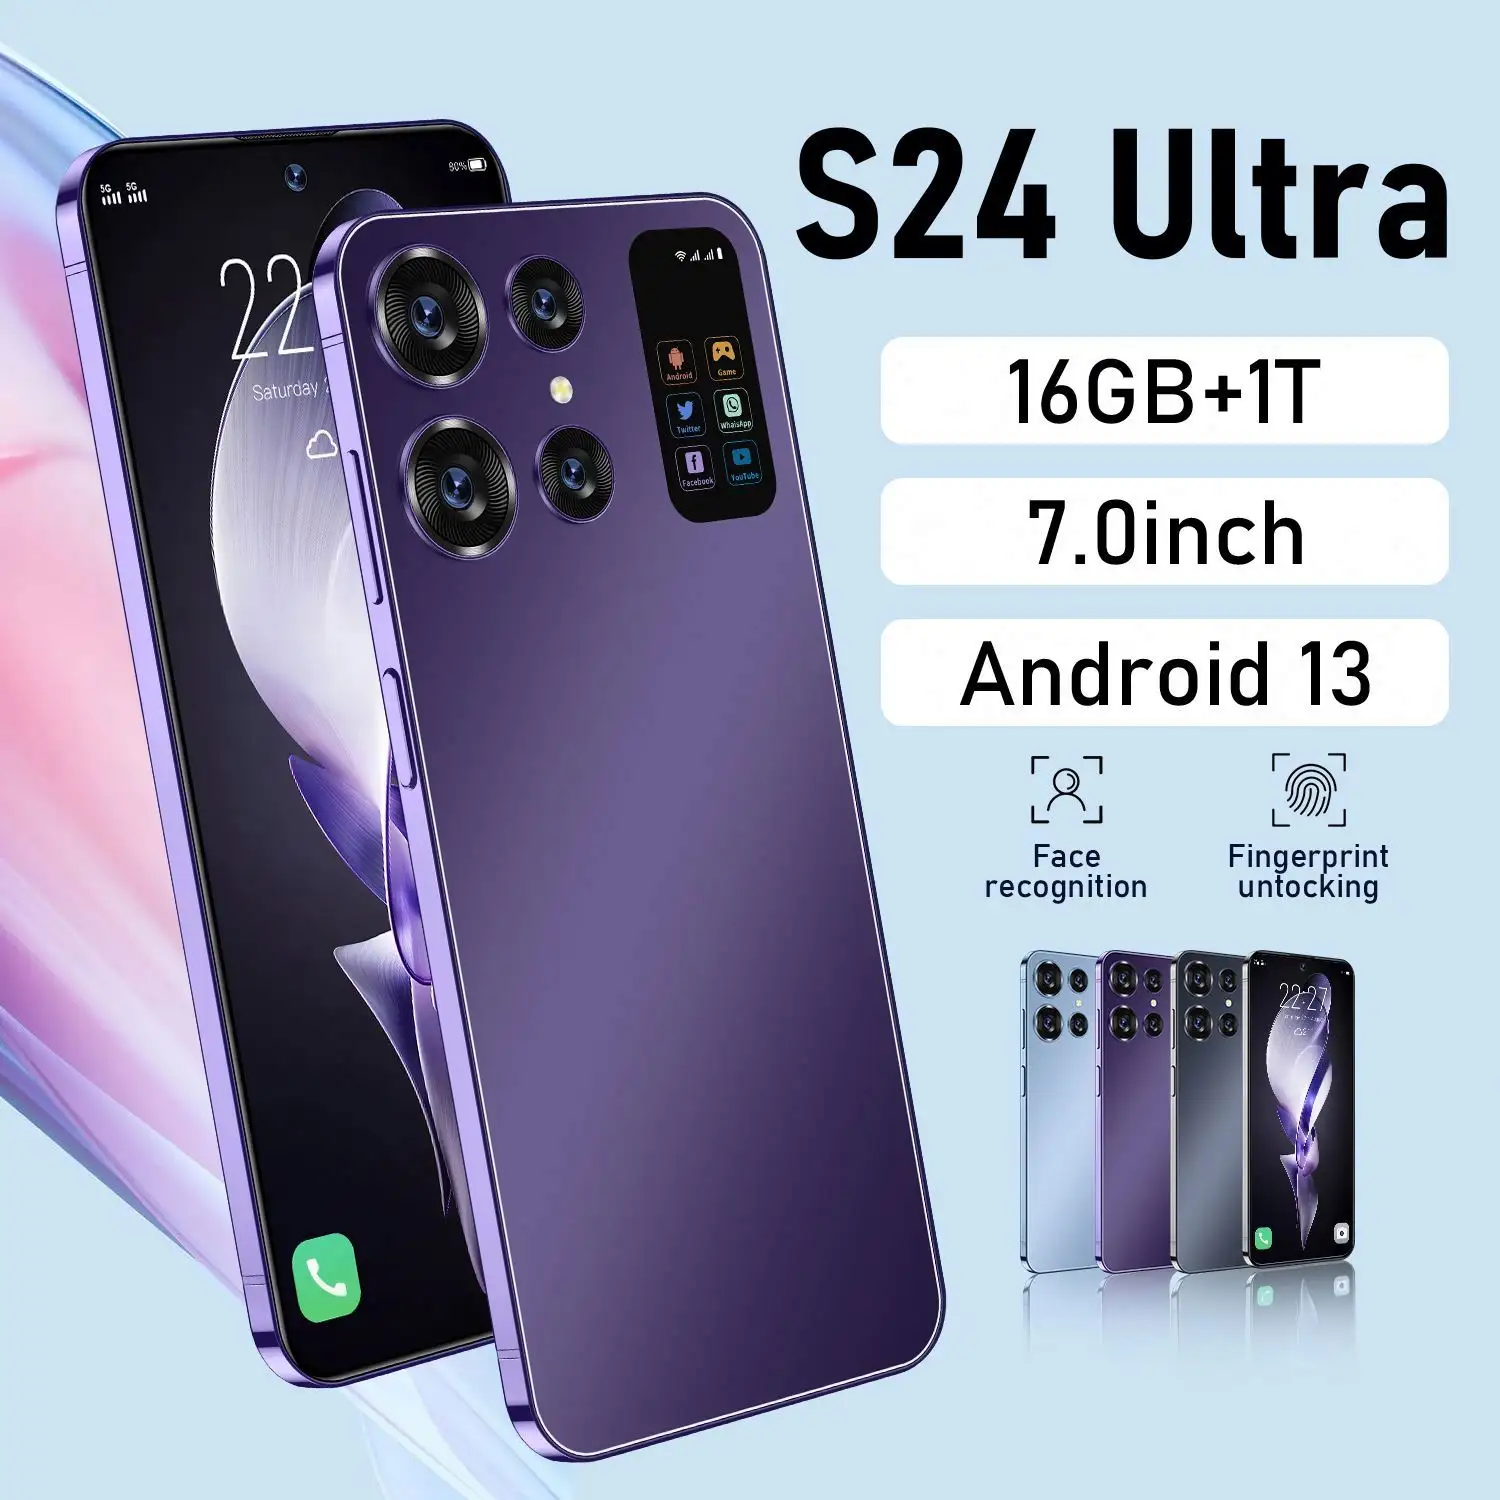 Orijinal S24 Ultra 7.3 inç büyük ekran Smartphone 16GB + 1TB Unlocked klon telefon çift Sim Android 13 cep telefonu ile 5G ağ